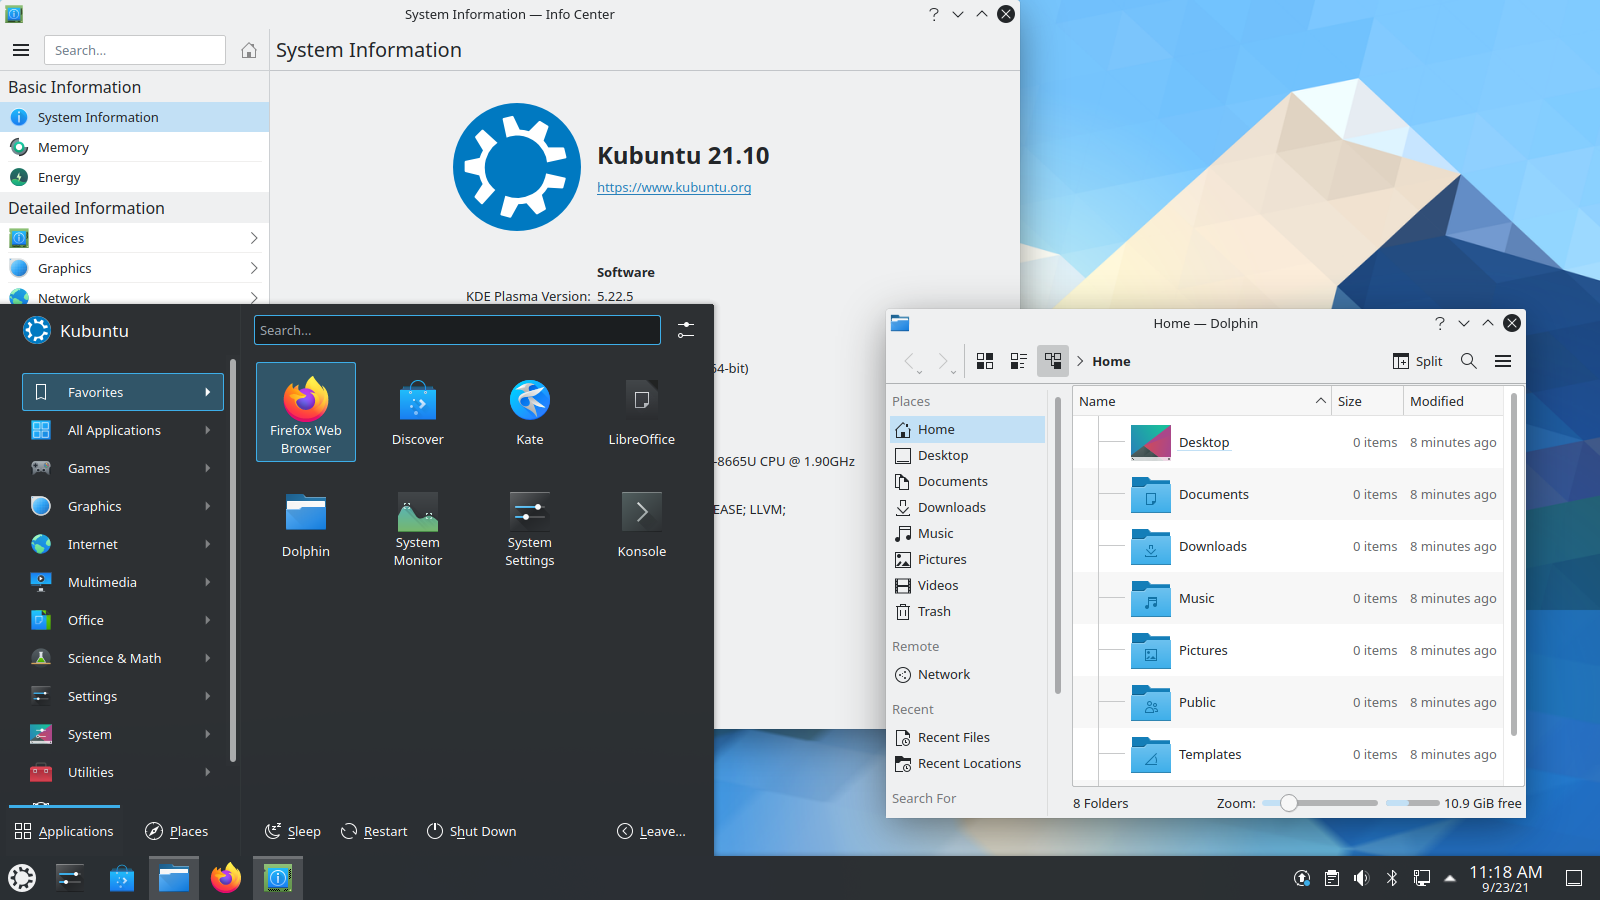 Kubuntu 21.10 Beta Desktop Image